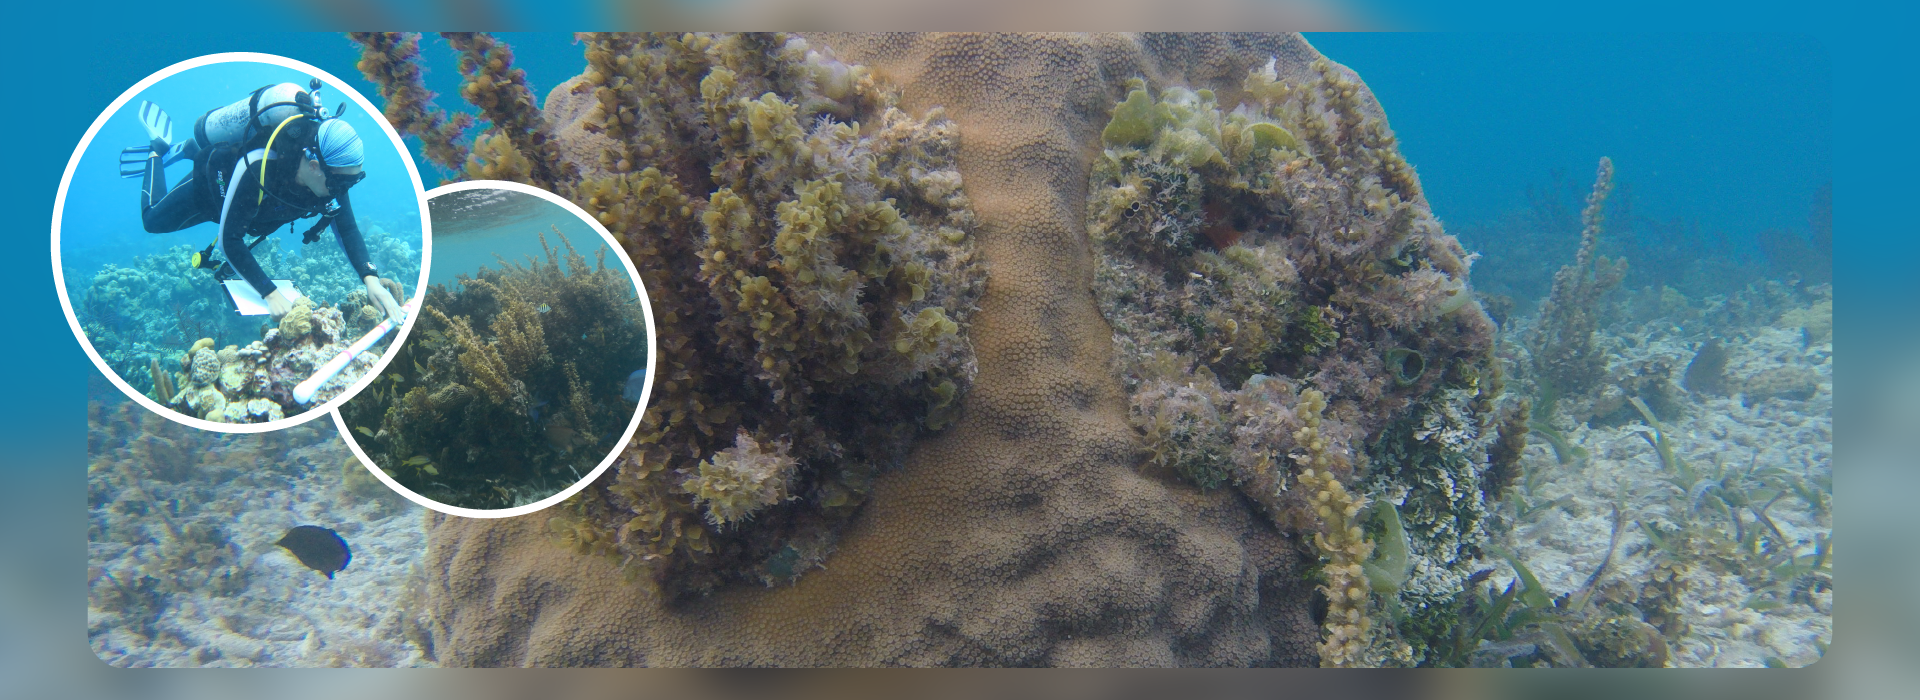 Different Reef, Same Problem